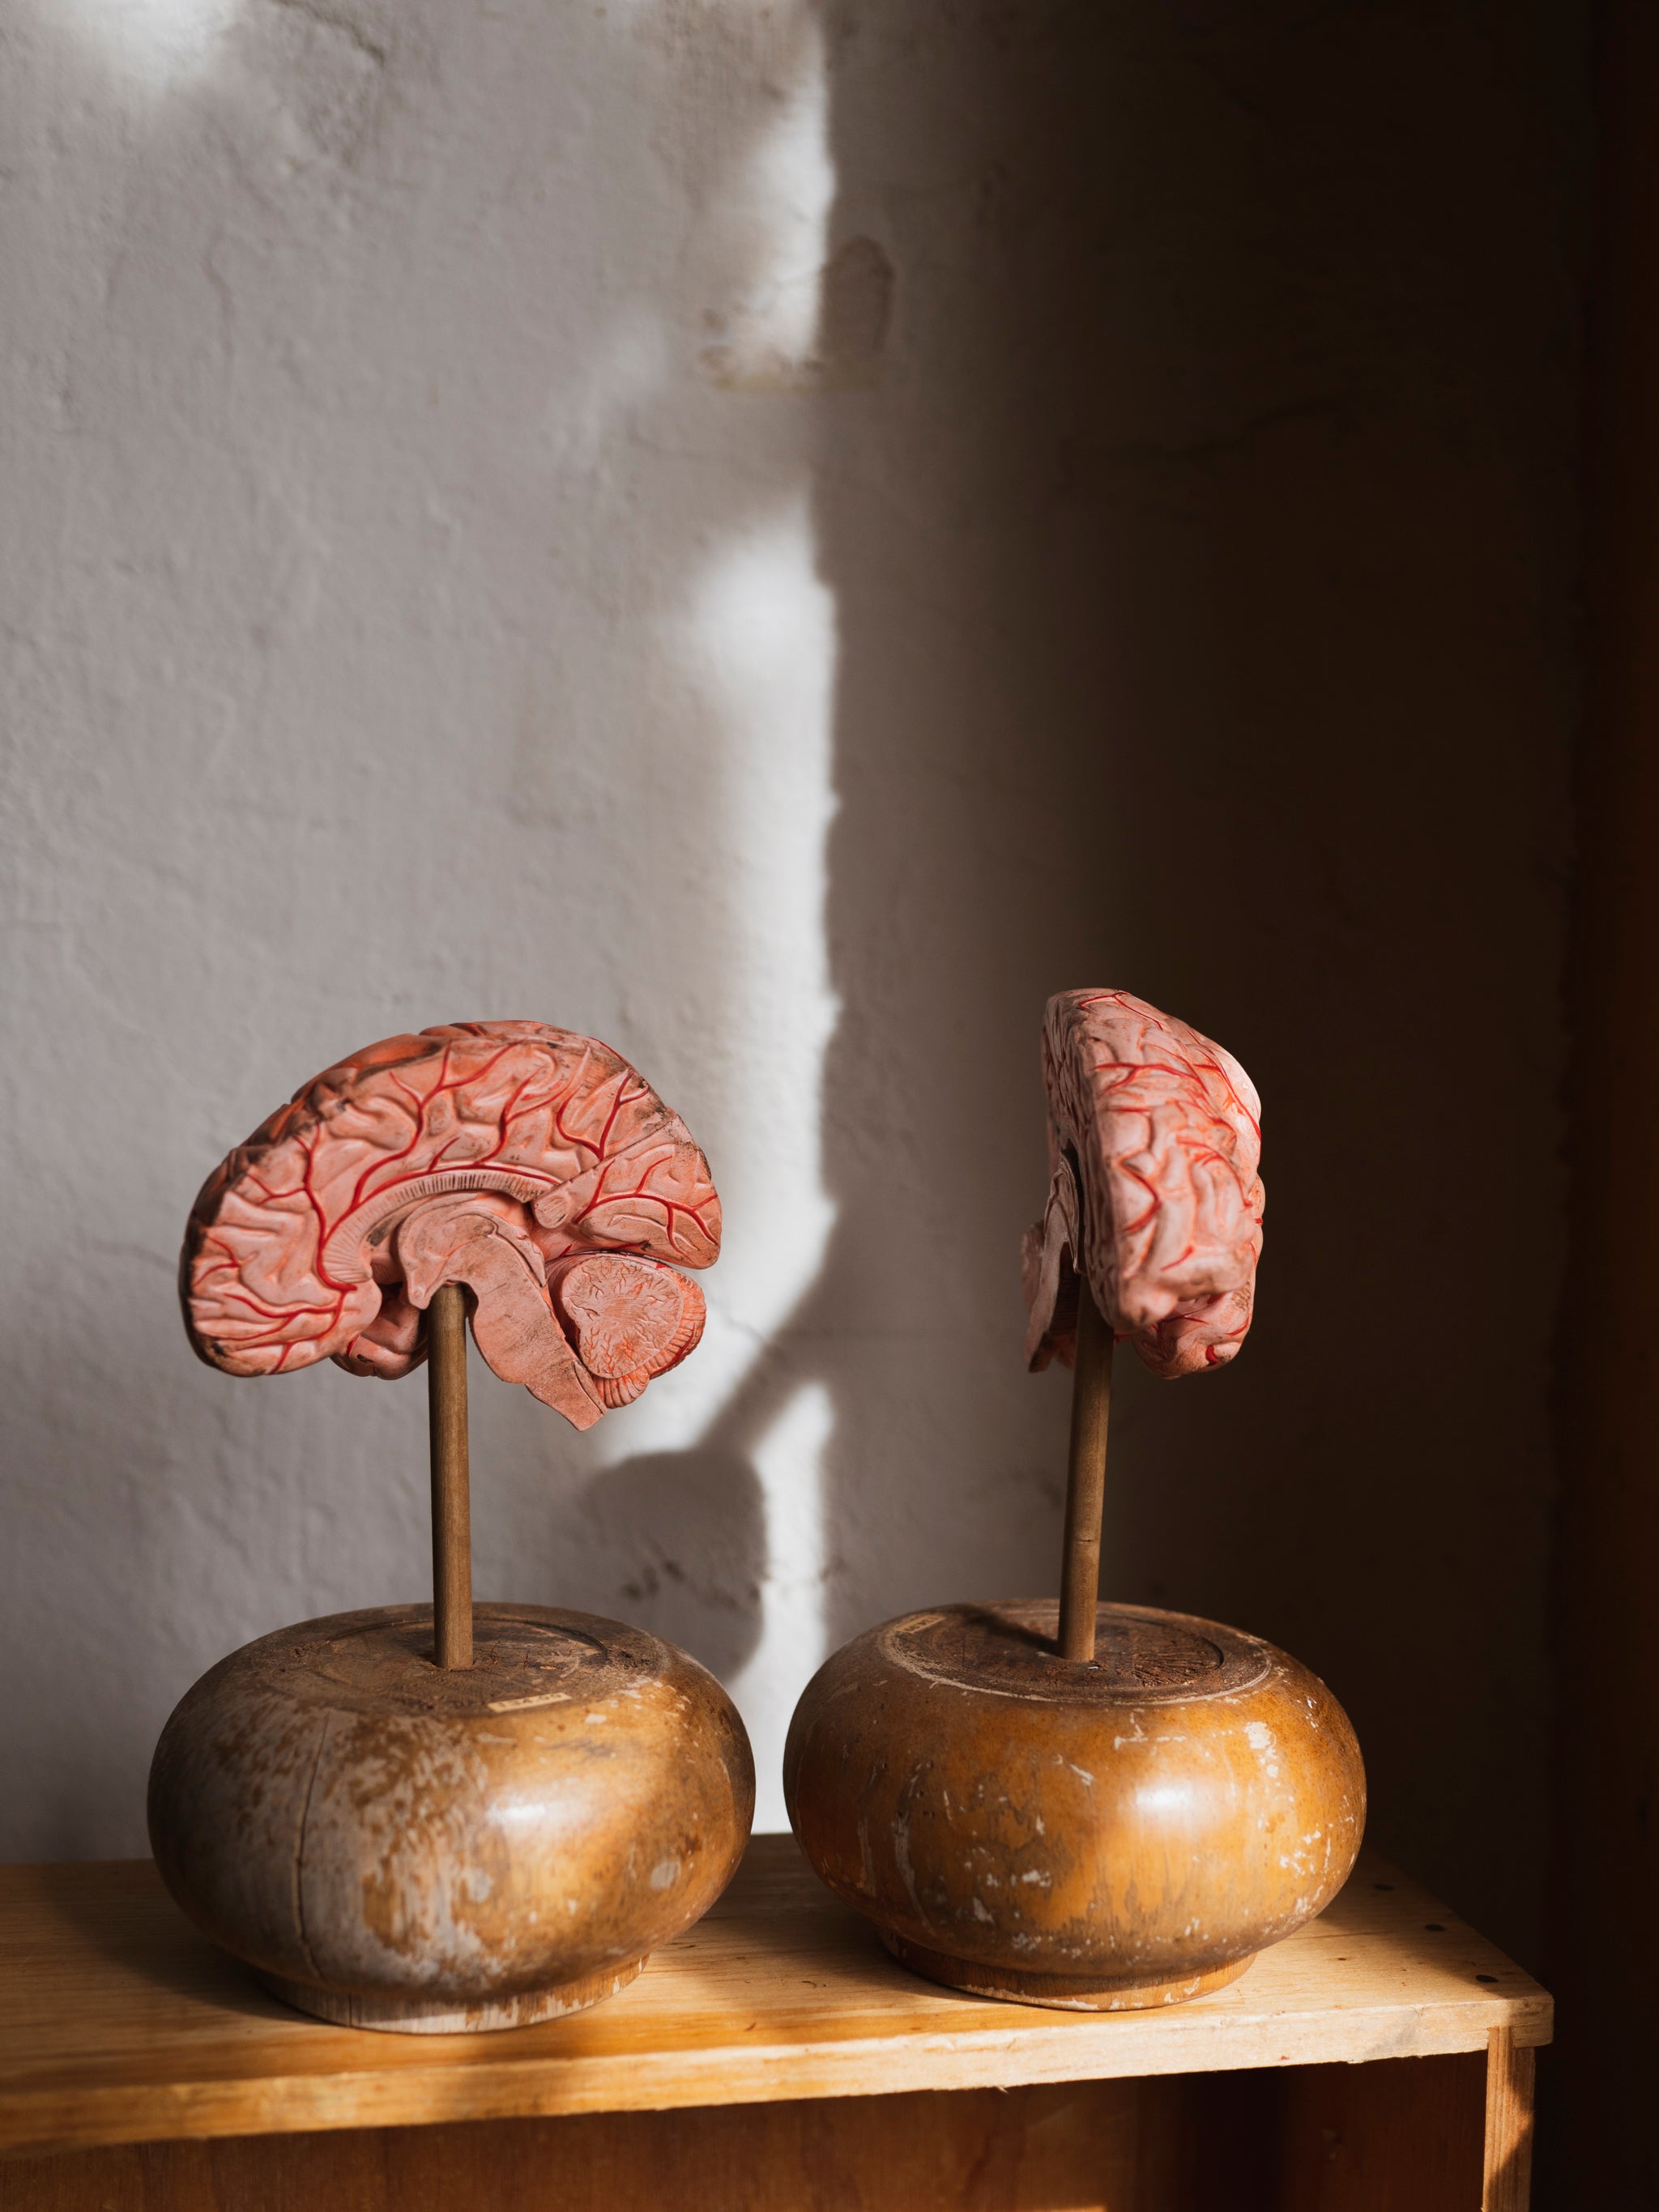 Medical Brain Model On Wood Stand, HD914